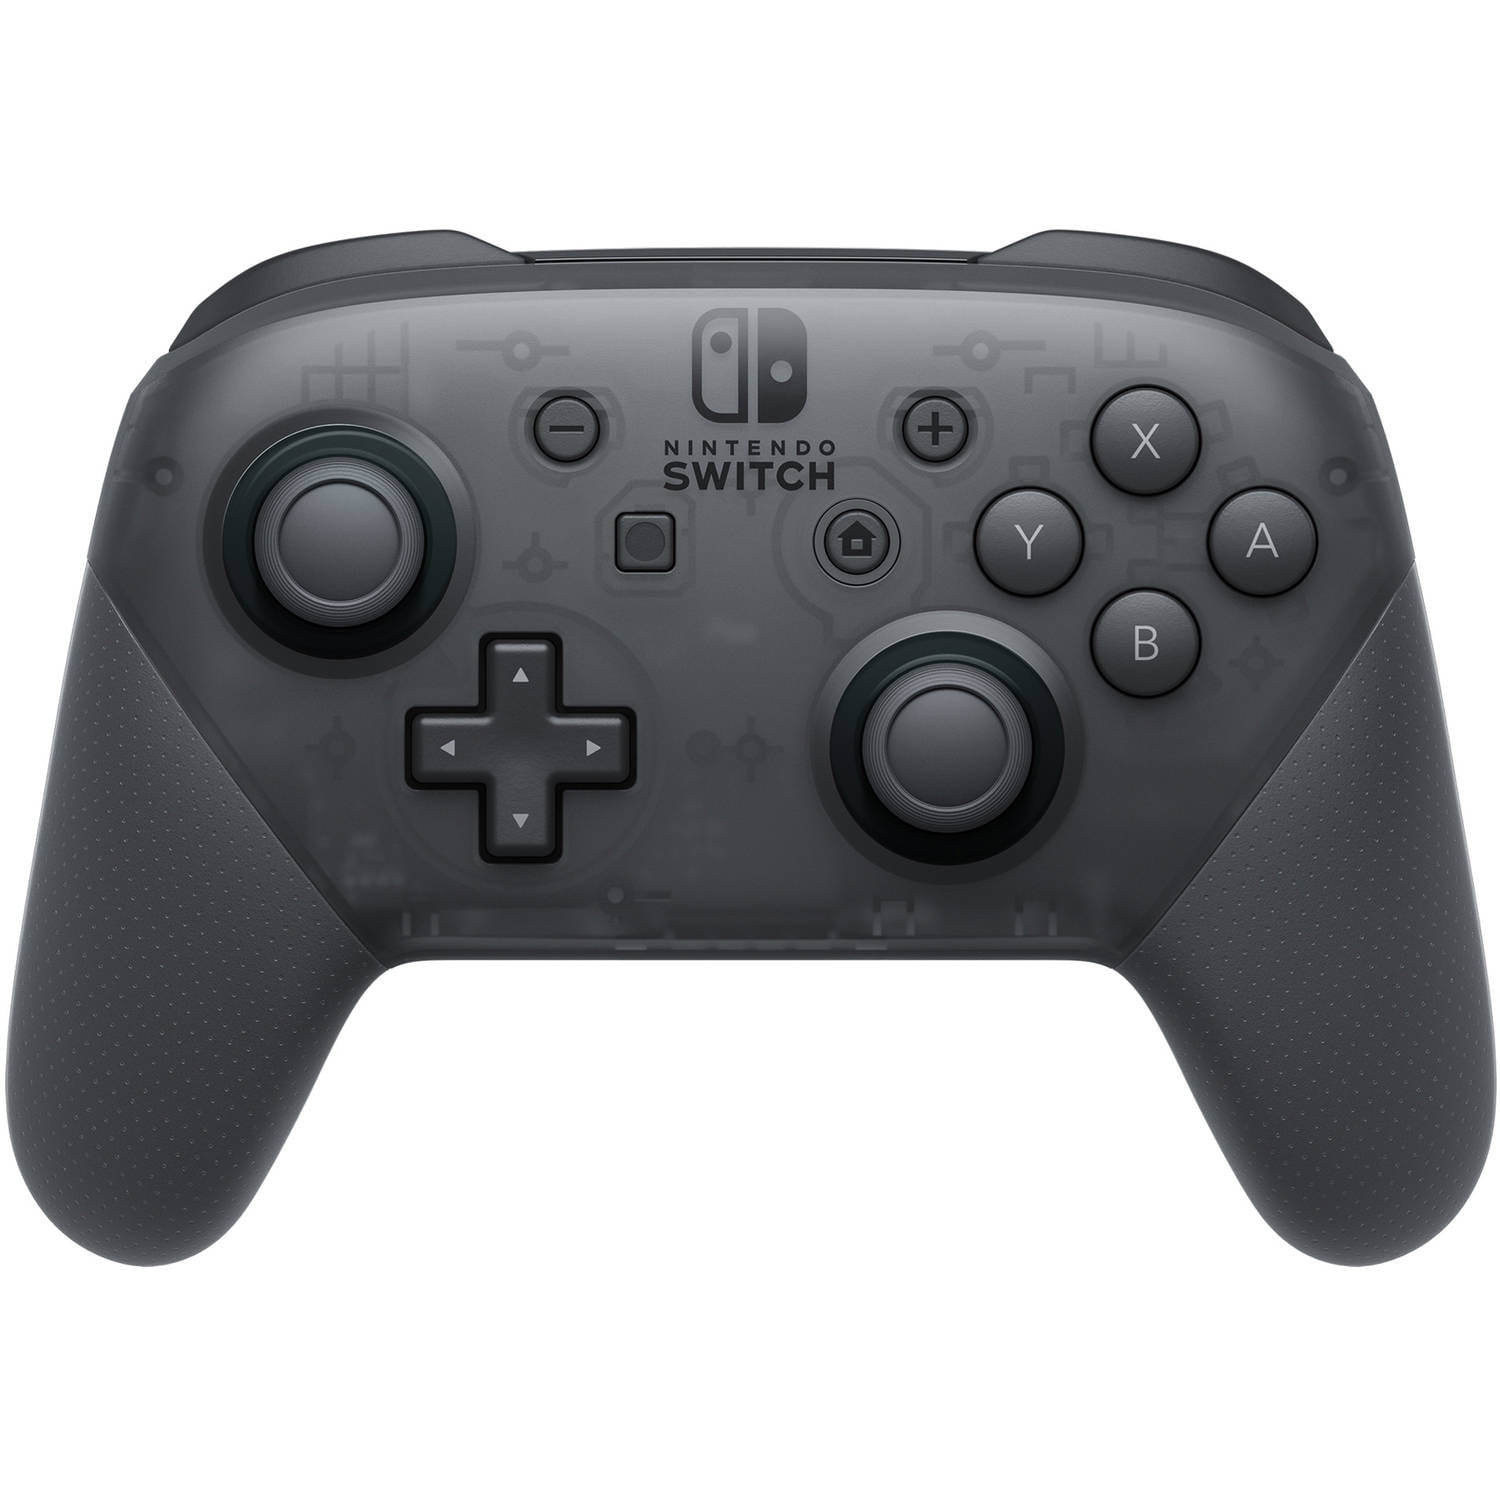 Shinkan Modernisere At øge Nintendo Switch Pro Controller - Walmart.com